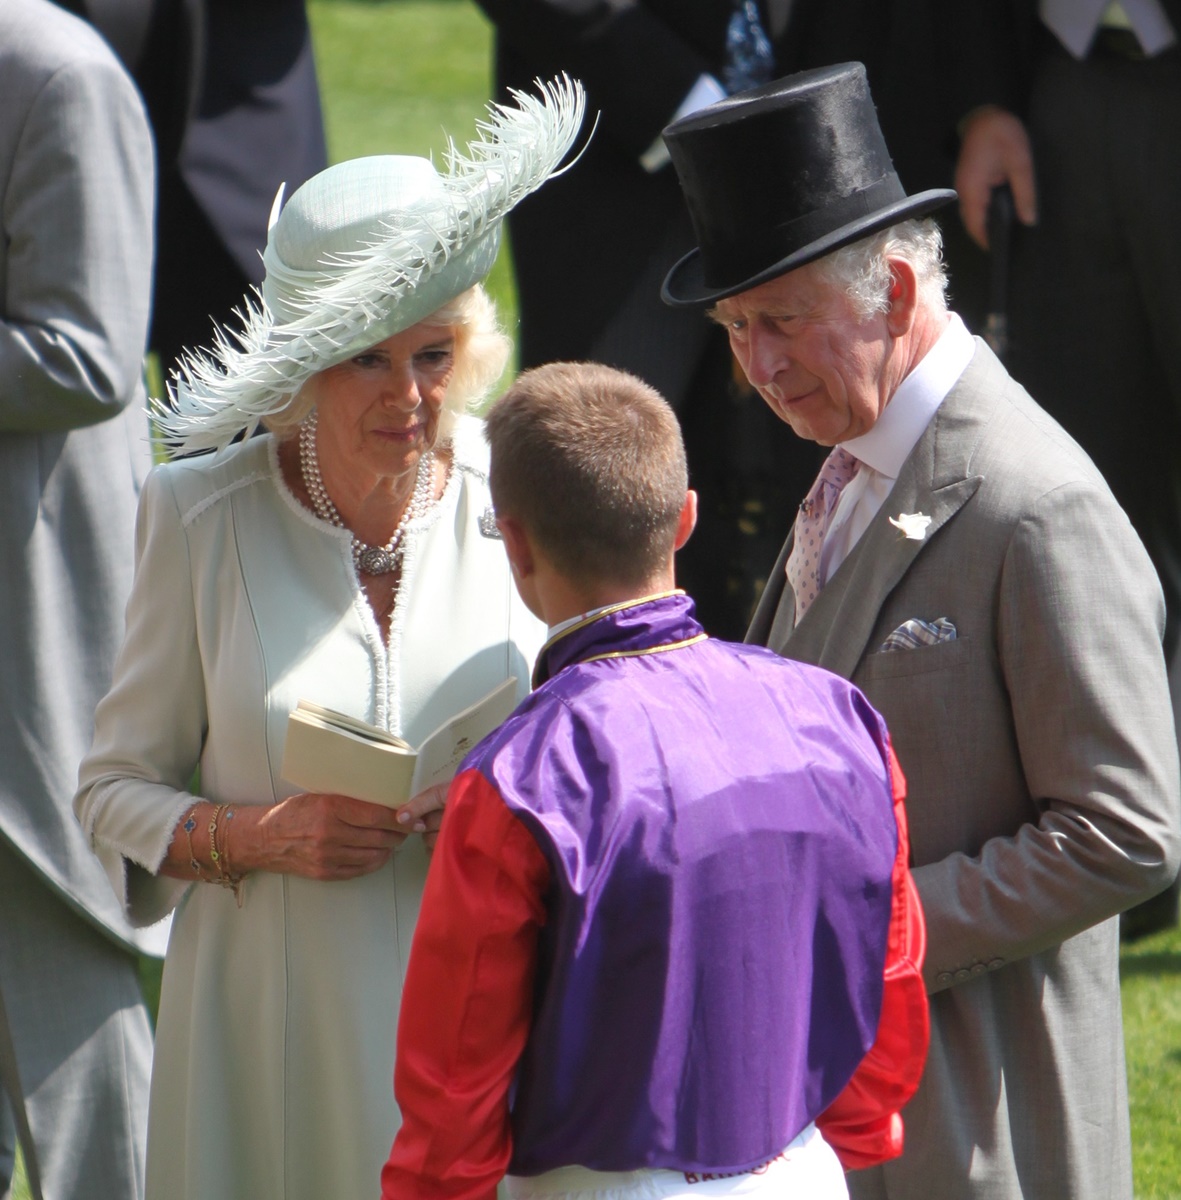 King Charles III and Queen Camilla at Royal Ascot 2023, photo credits Antony March.